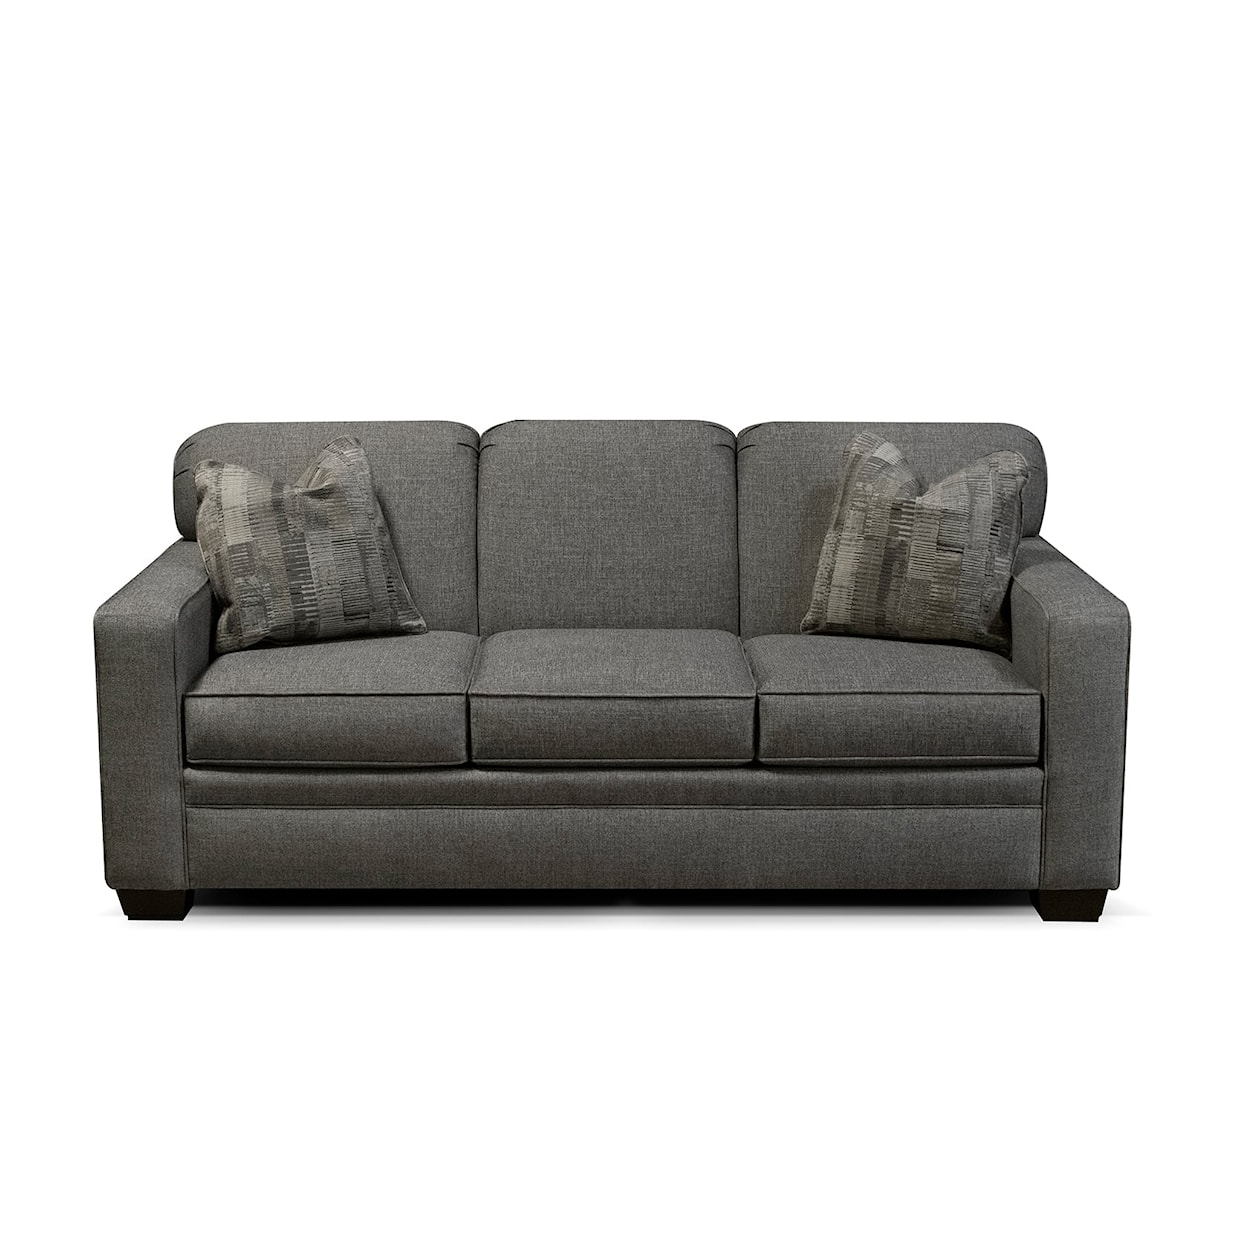 Tennessee Custom Upholstery 6000 Series Queen Sleeper Sofa